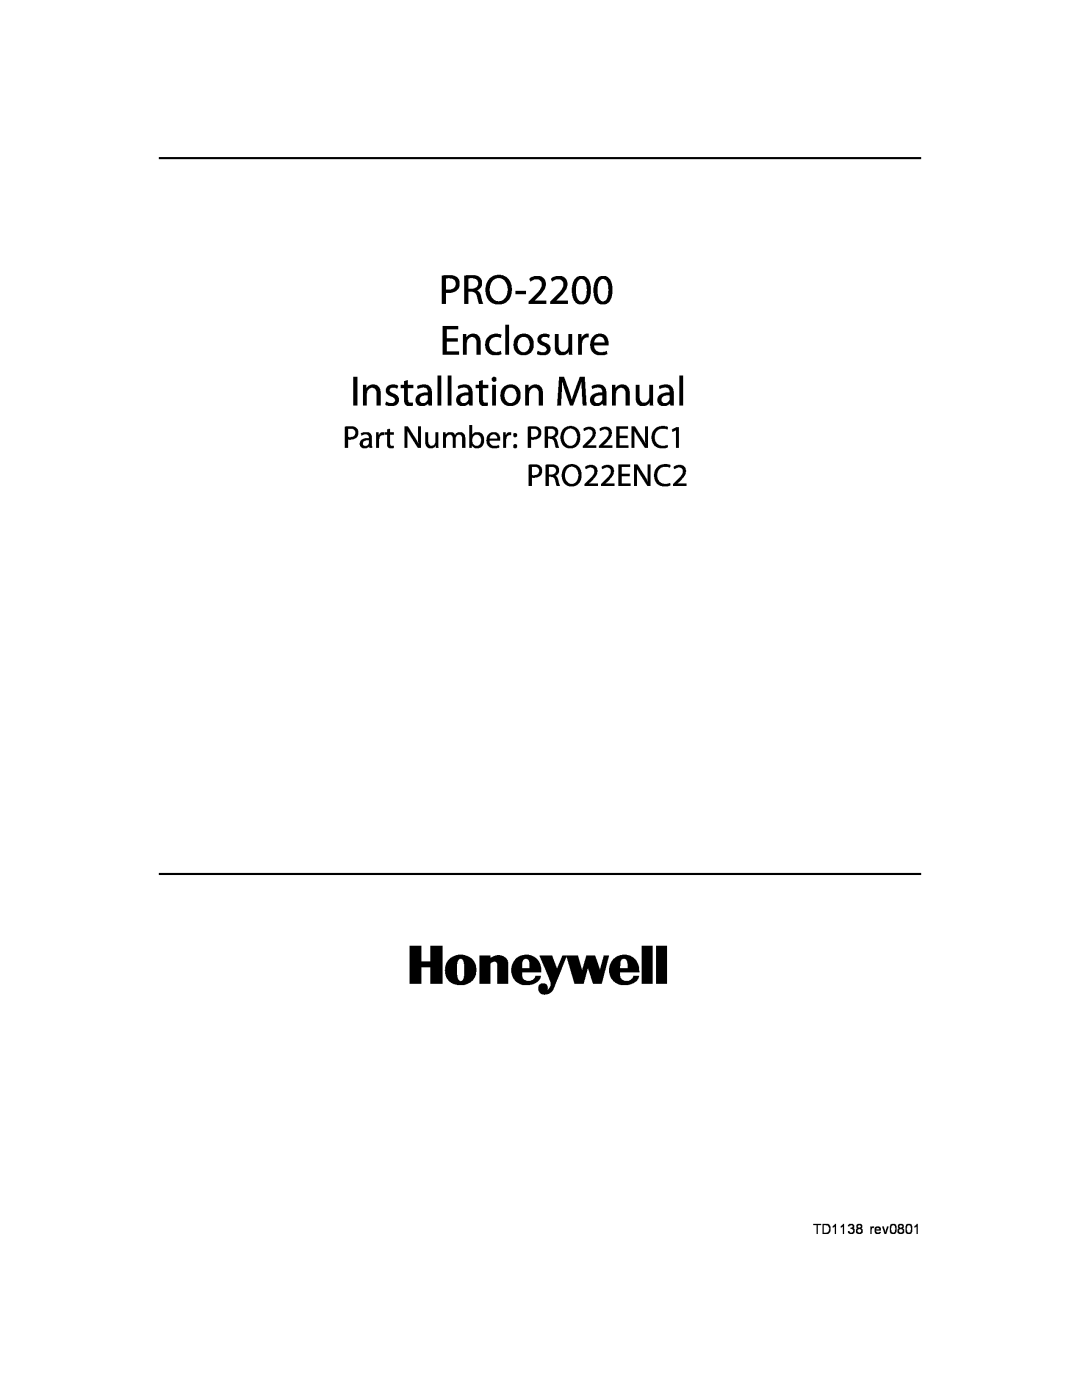 Honeywell installation manual PRO-2200 Enclosure Installation Manual, Part Number PRO22ENC1 PRO22ENC2, TD1138 rev0801 